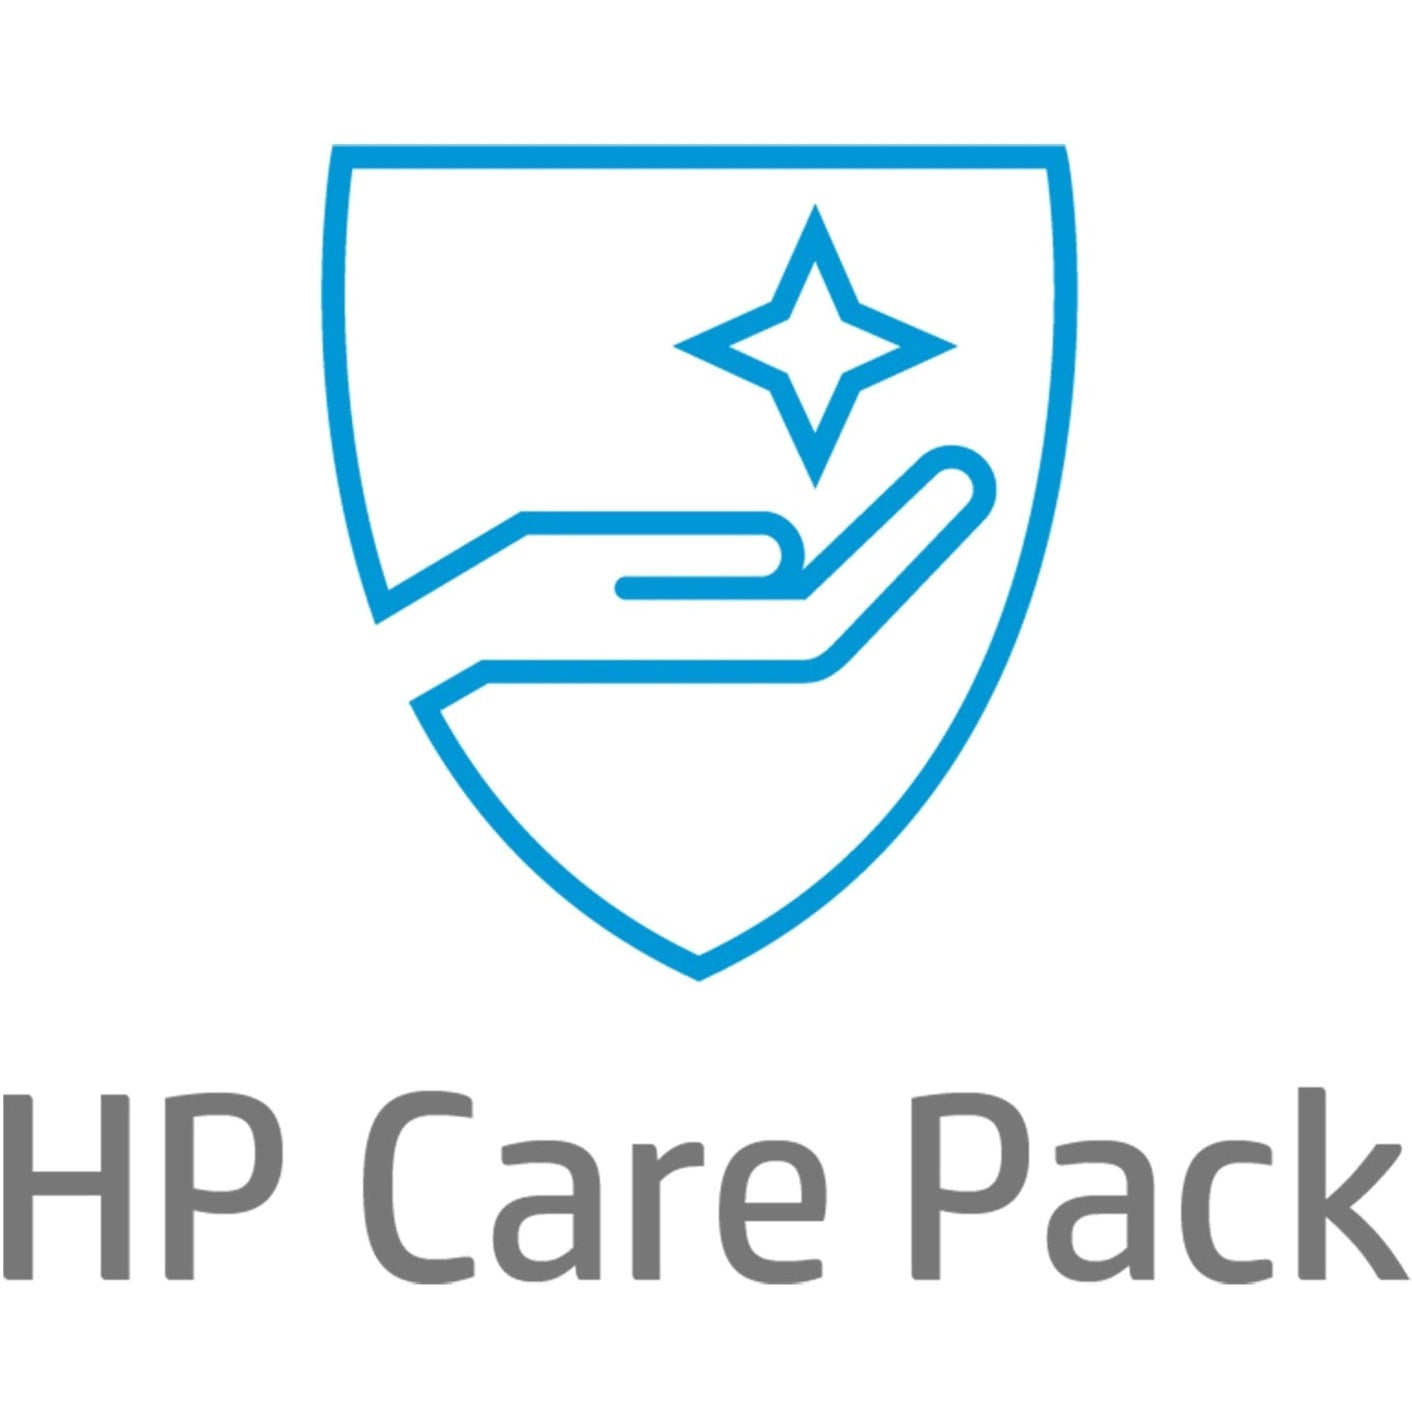 HP Care Pack - 5 Year - Service (UF236E)